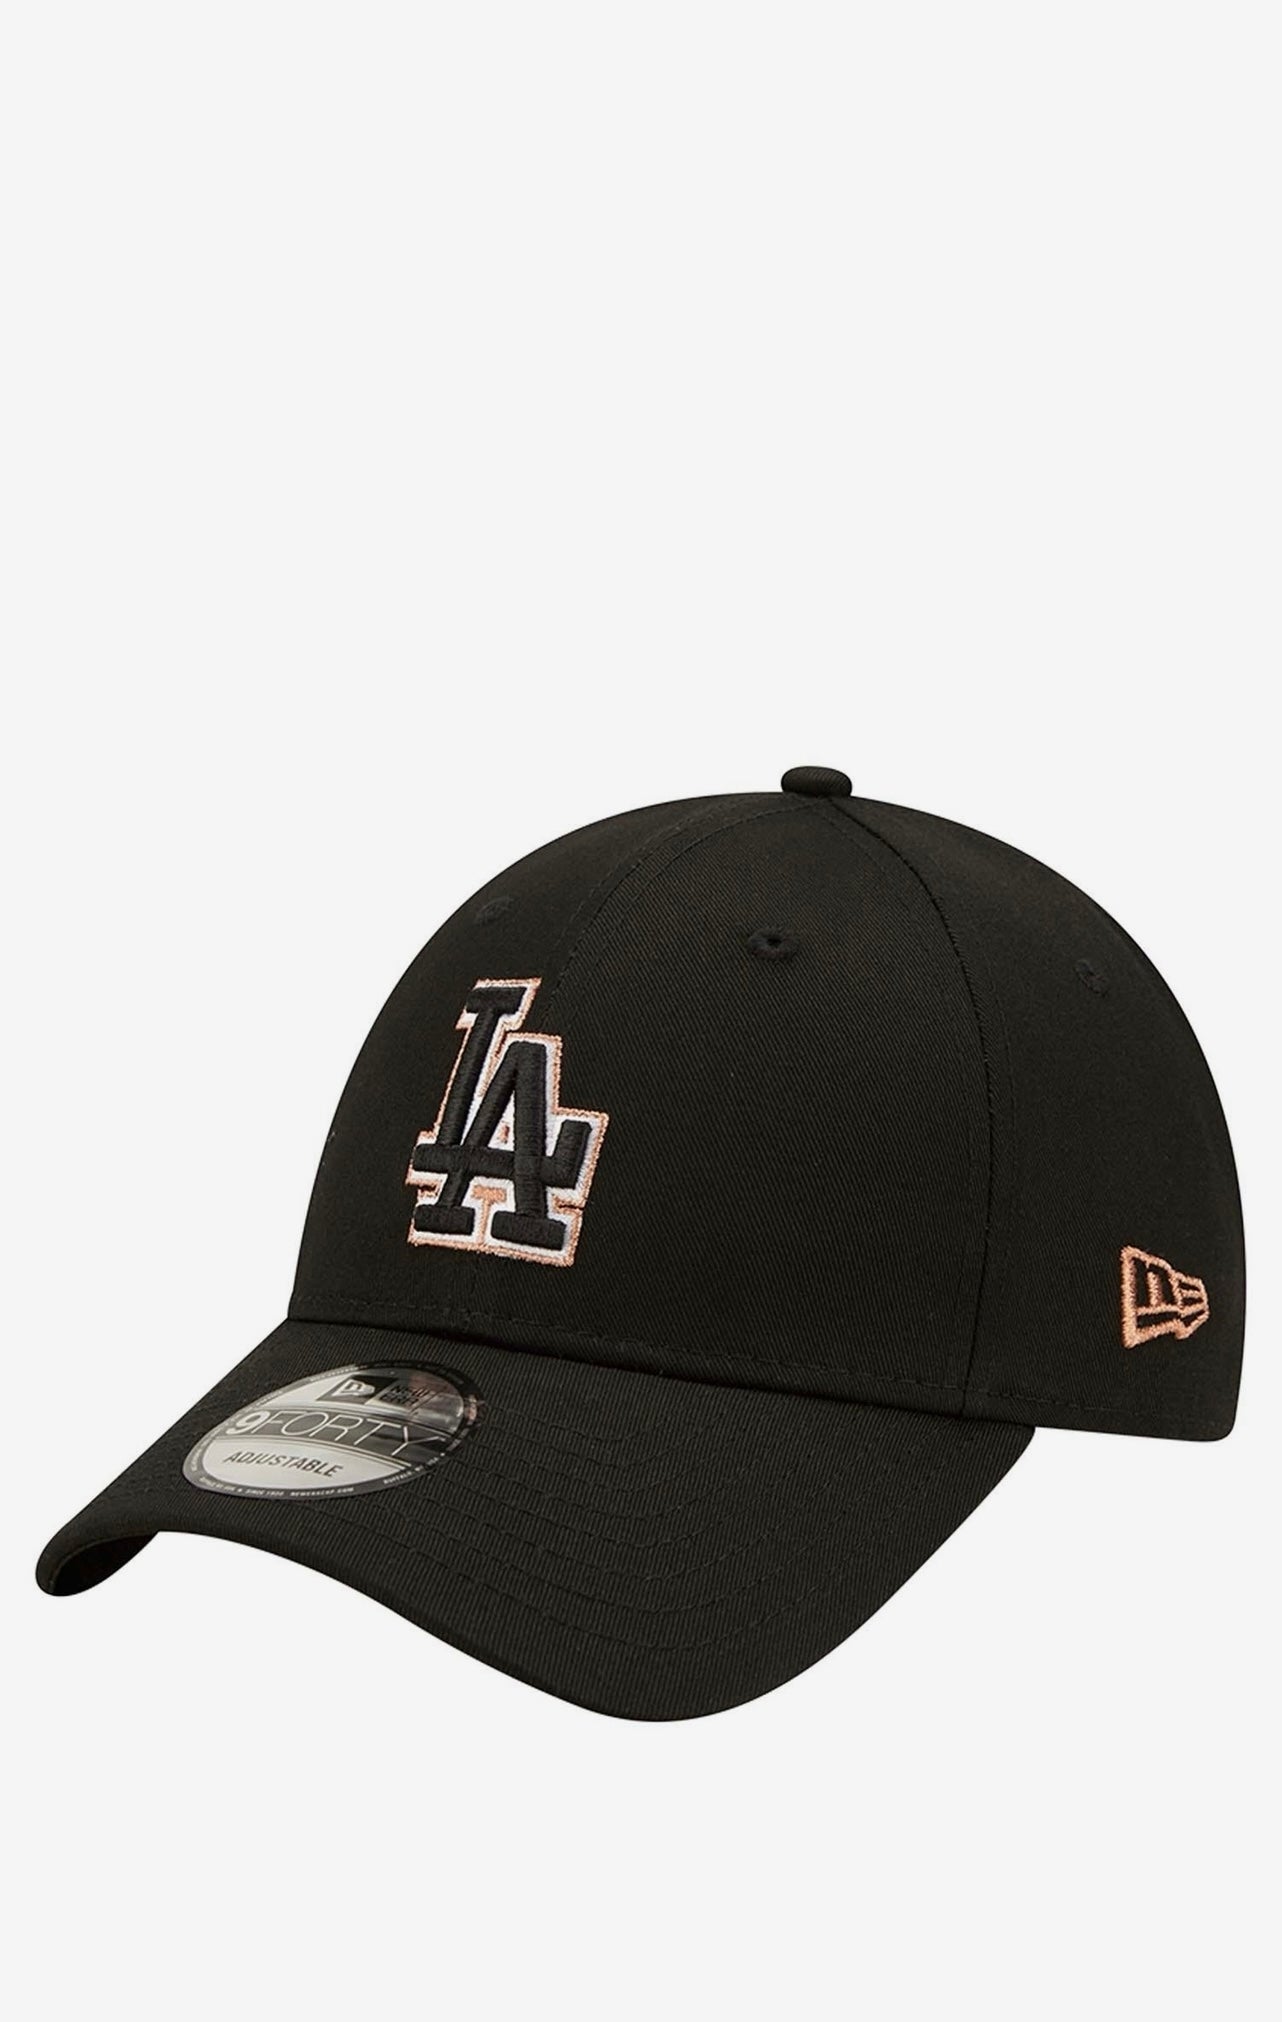 NEW ERA-HAT